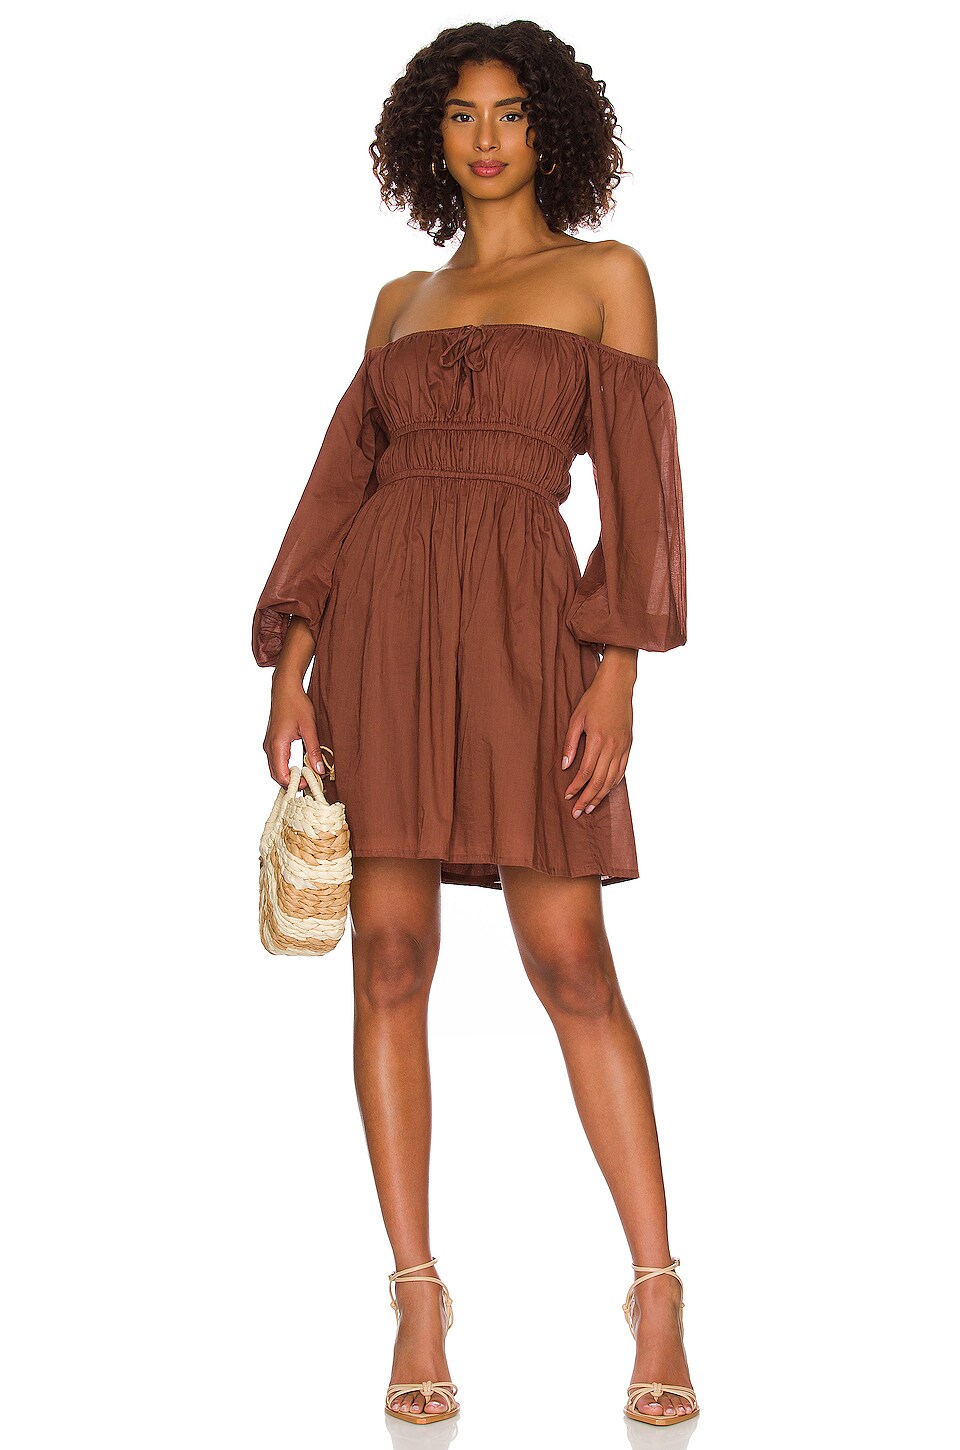 Chocolate brown cotton blend dress